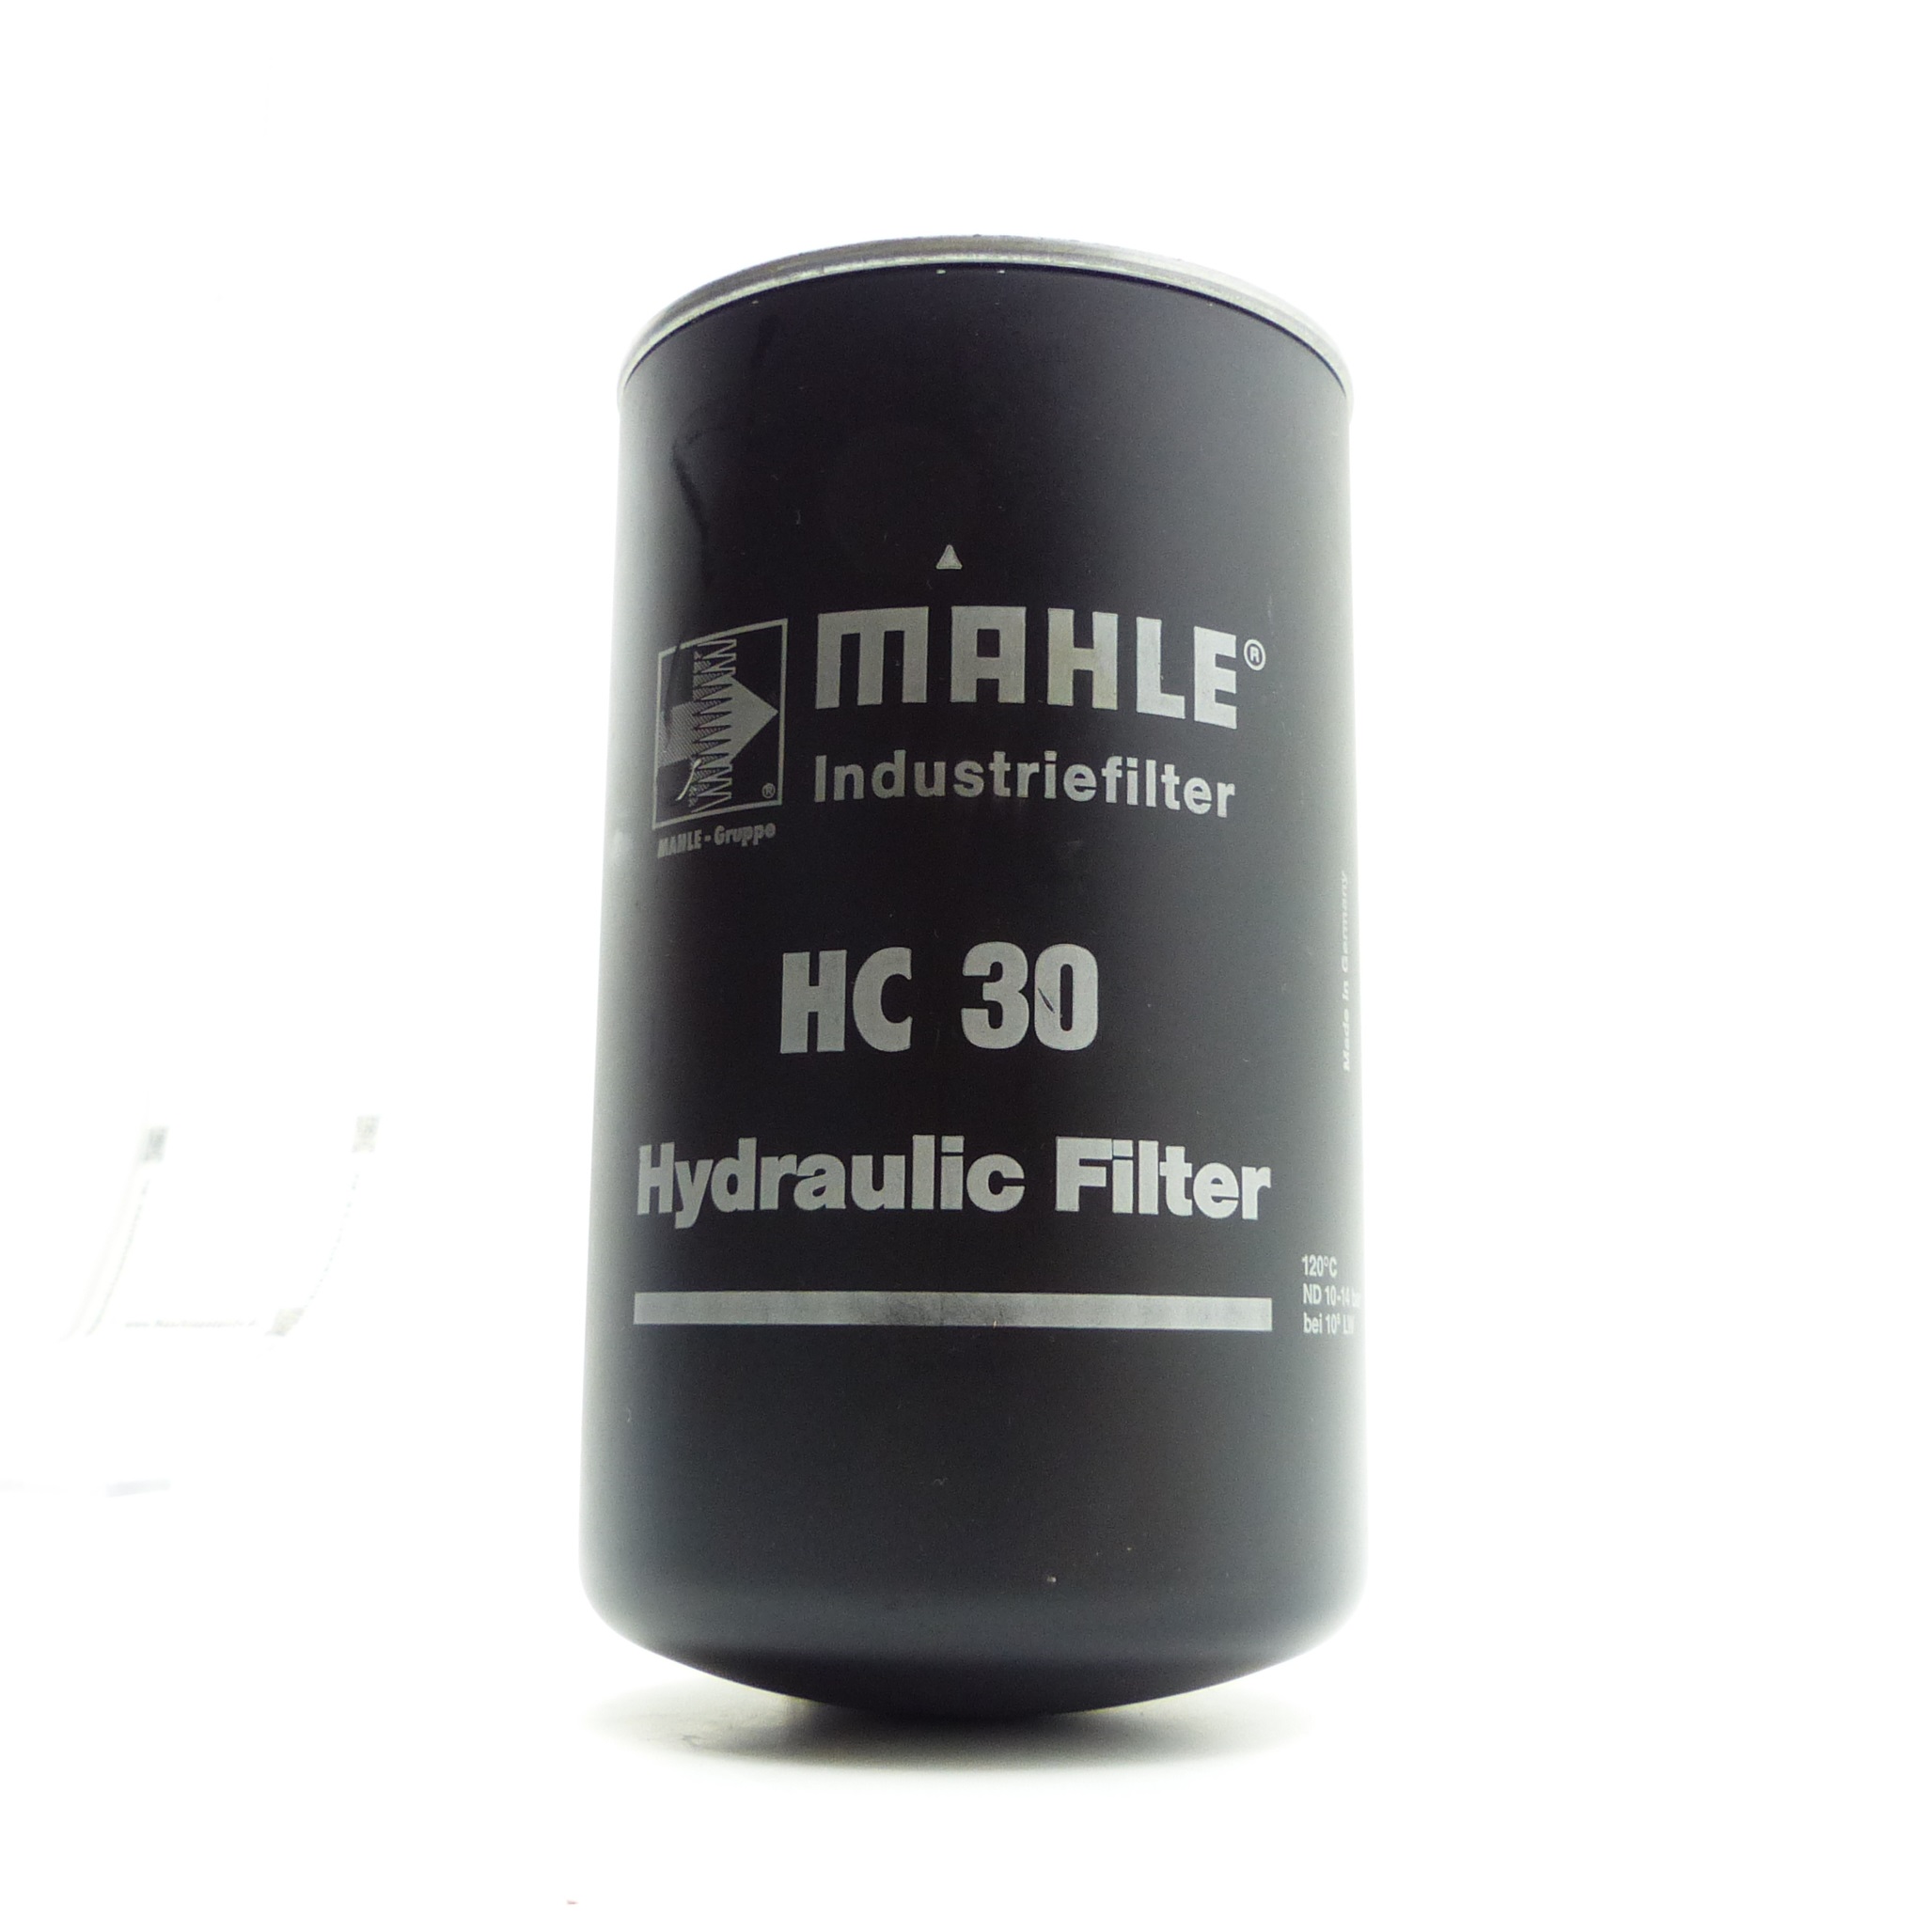 Industrial Filter HC 30 